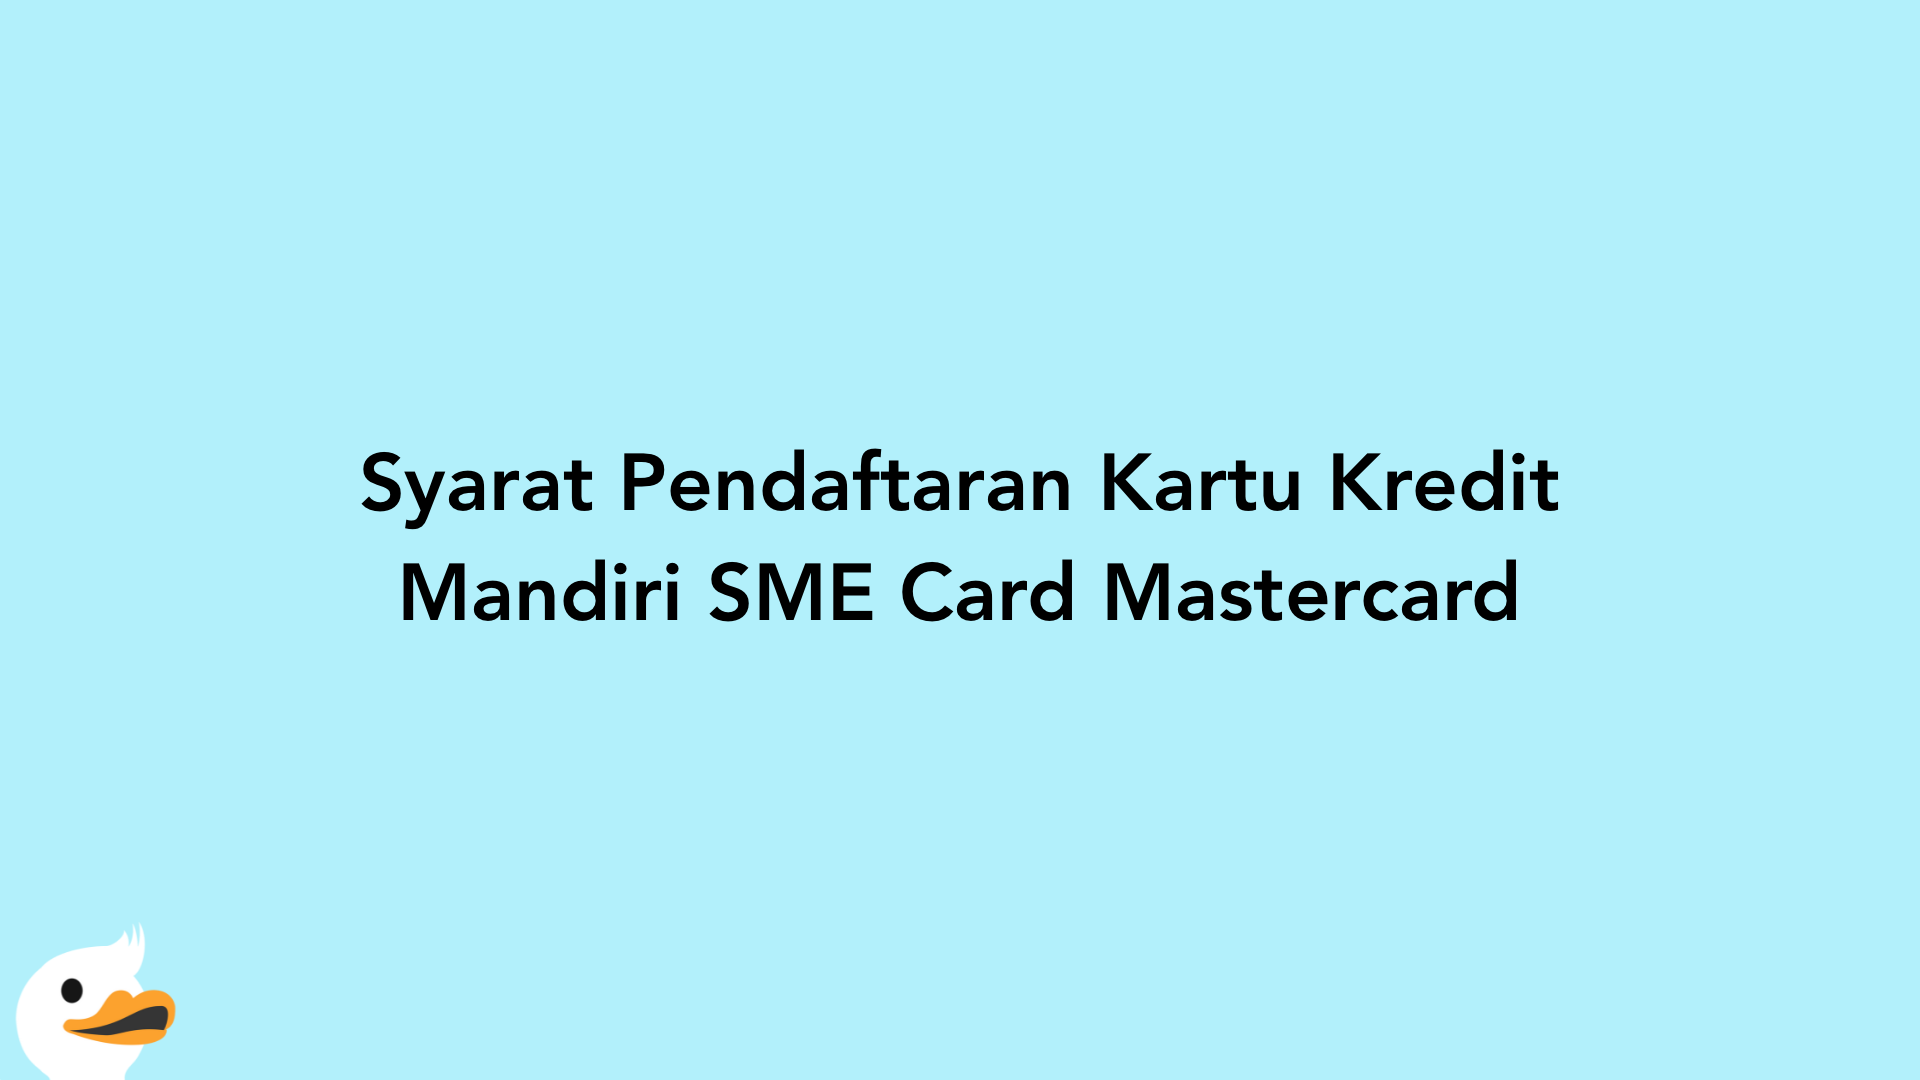 Syarat Pendaftaran Kartu Kredit Mandiri SME Card Mastercard